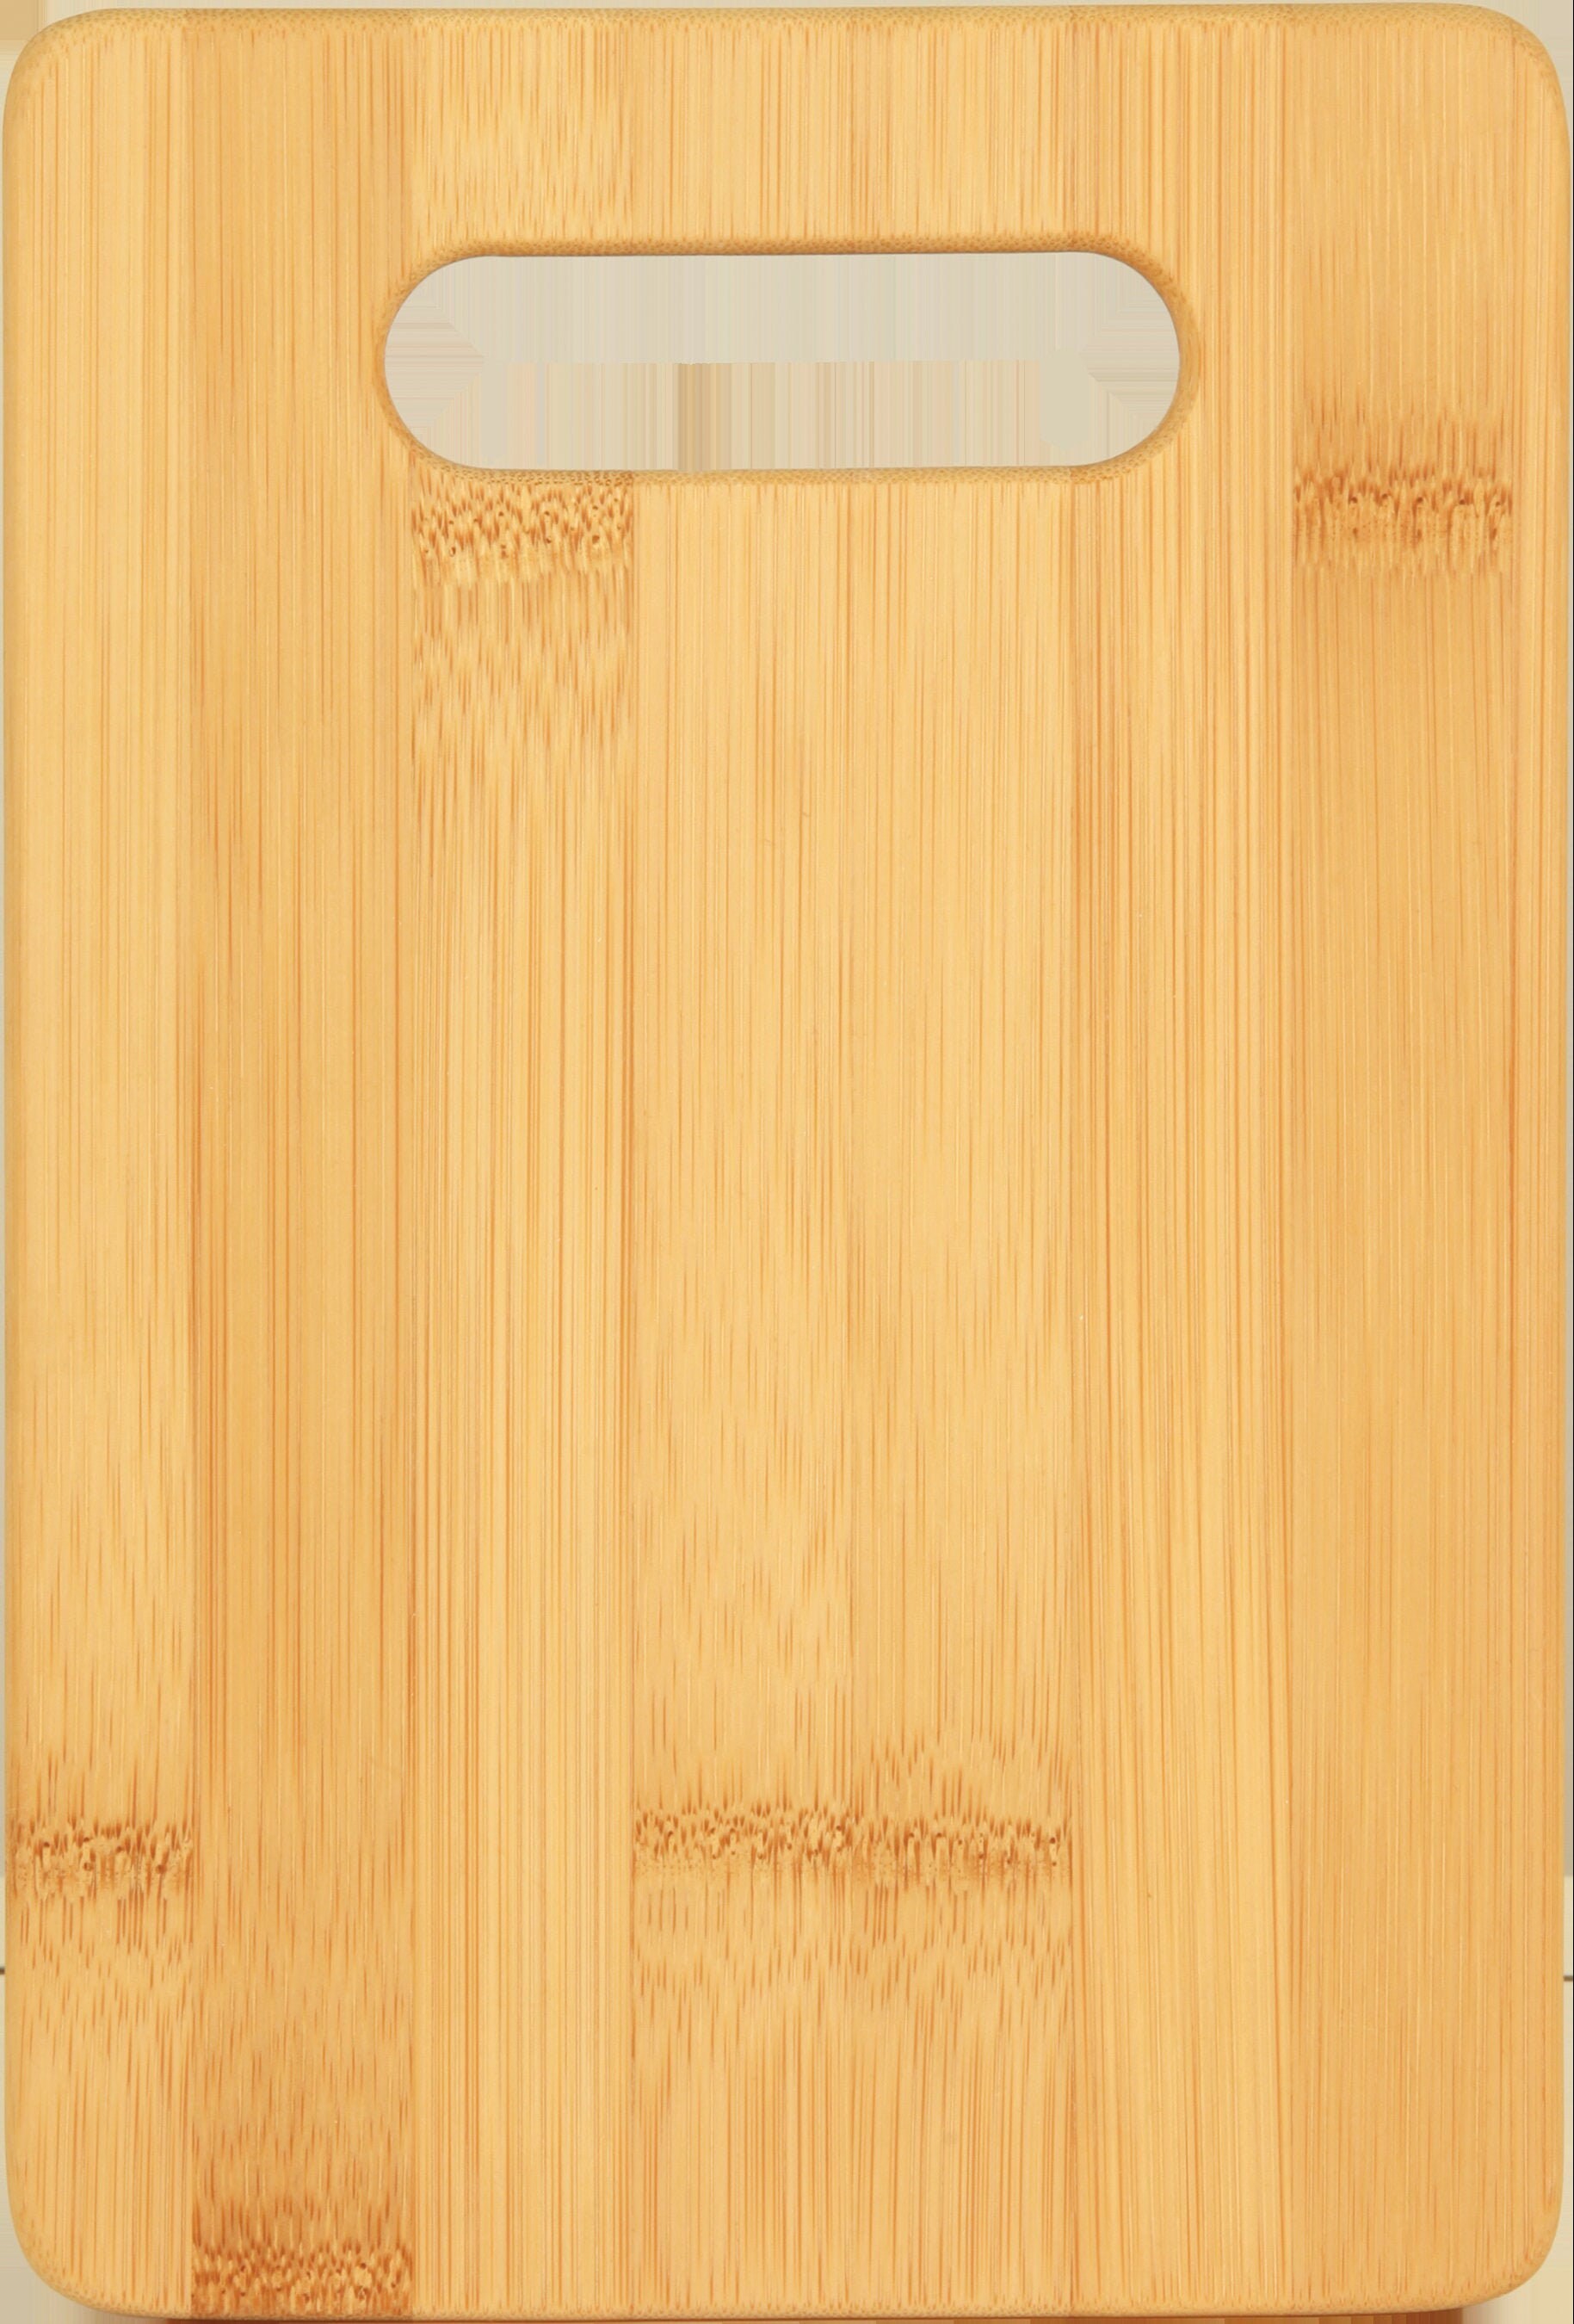 9 x 6 Bamboo Bar Cutting Board - Be Kind - ImpressMeGifts